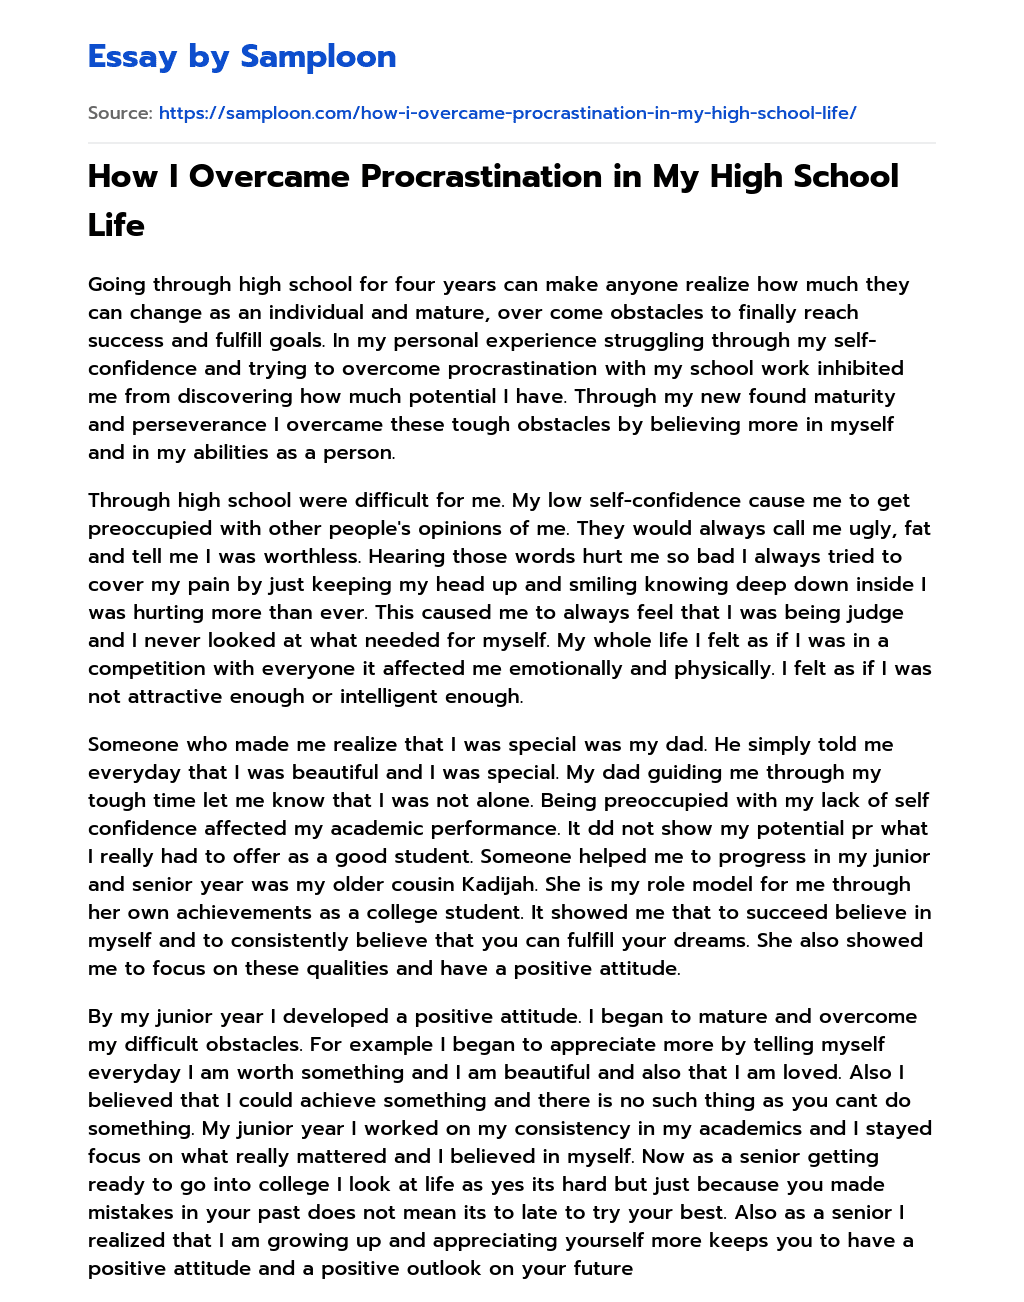 How I Overcame Procrastination in My High School Life essay